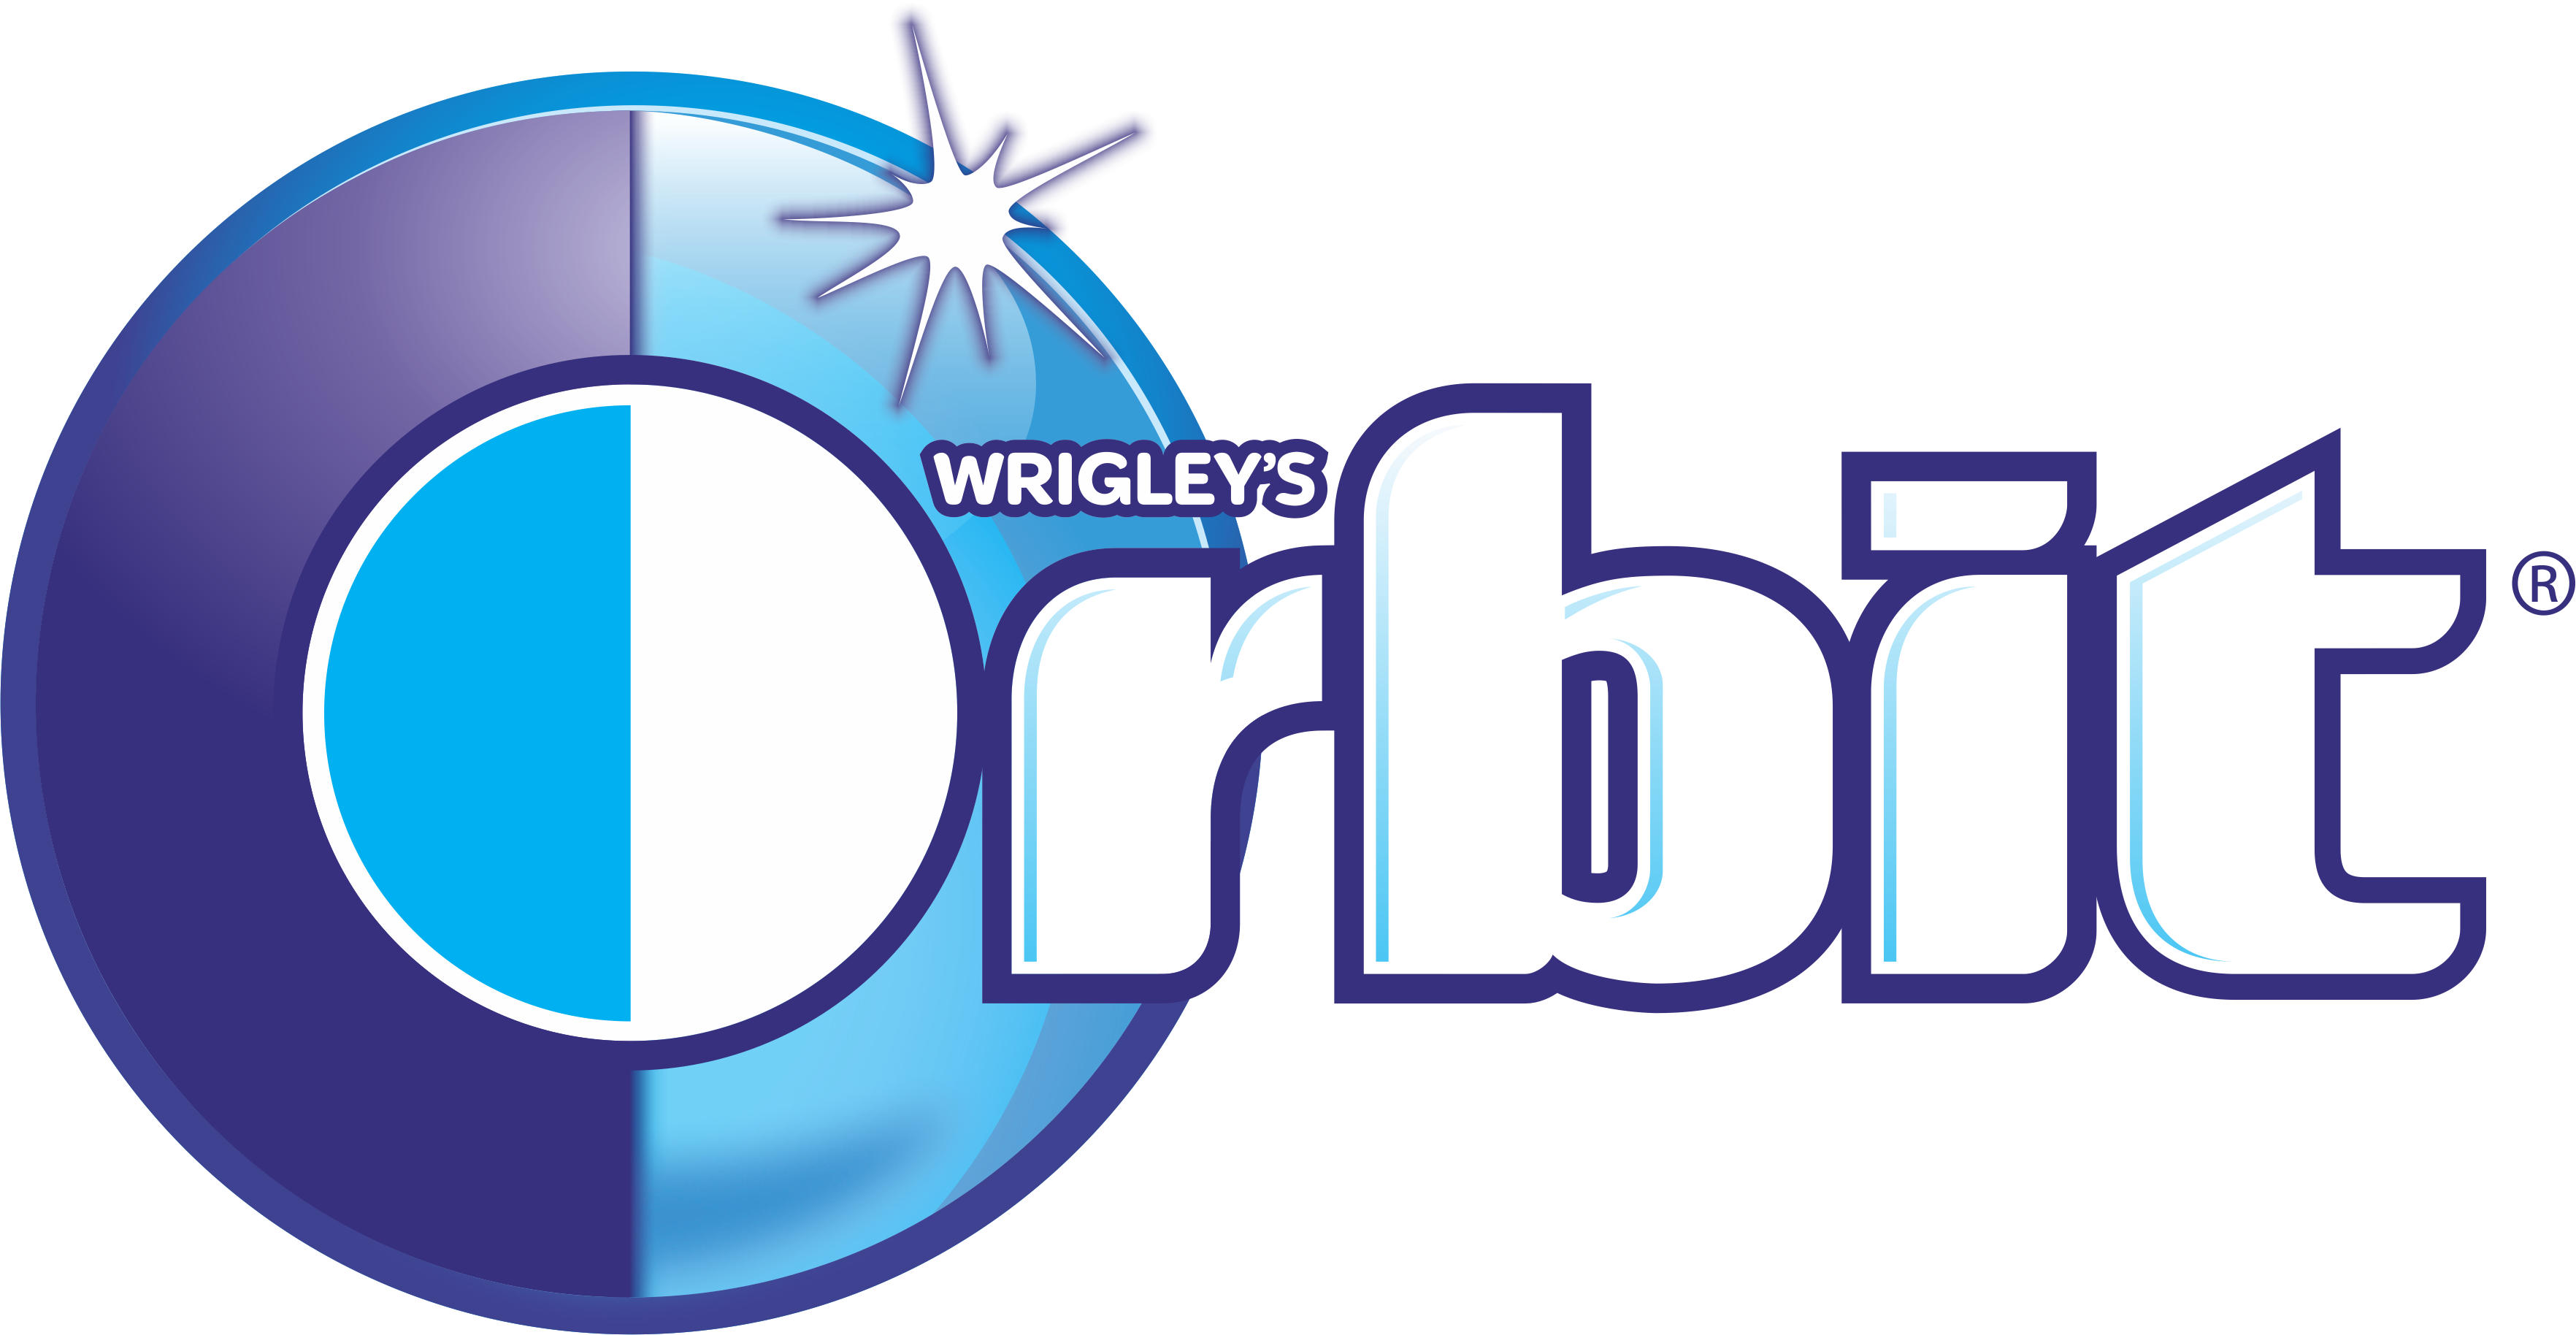 Orbit logotyp